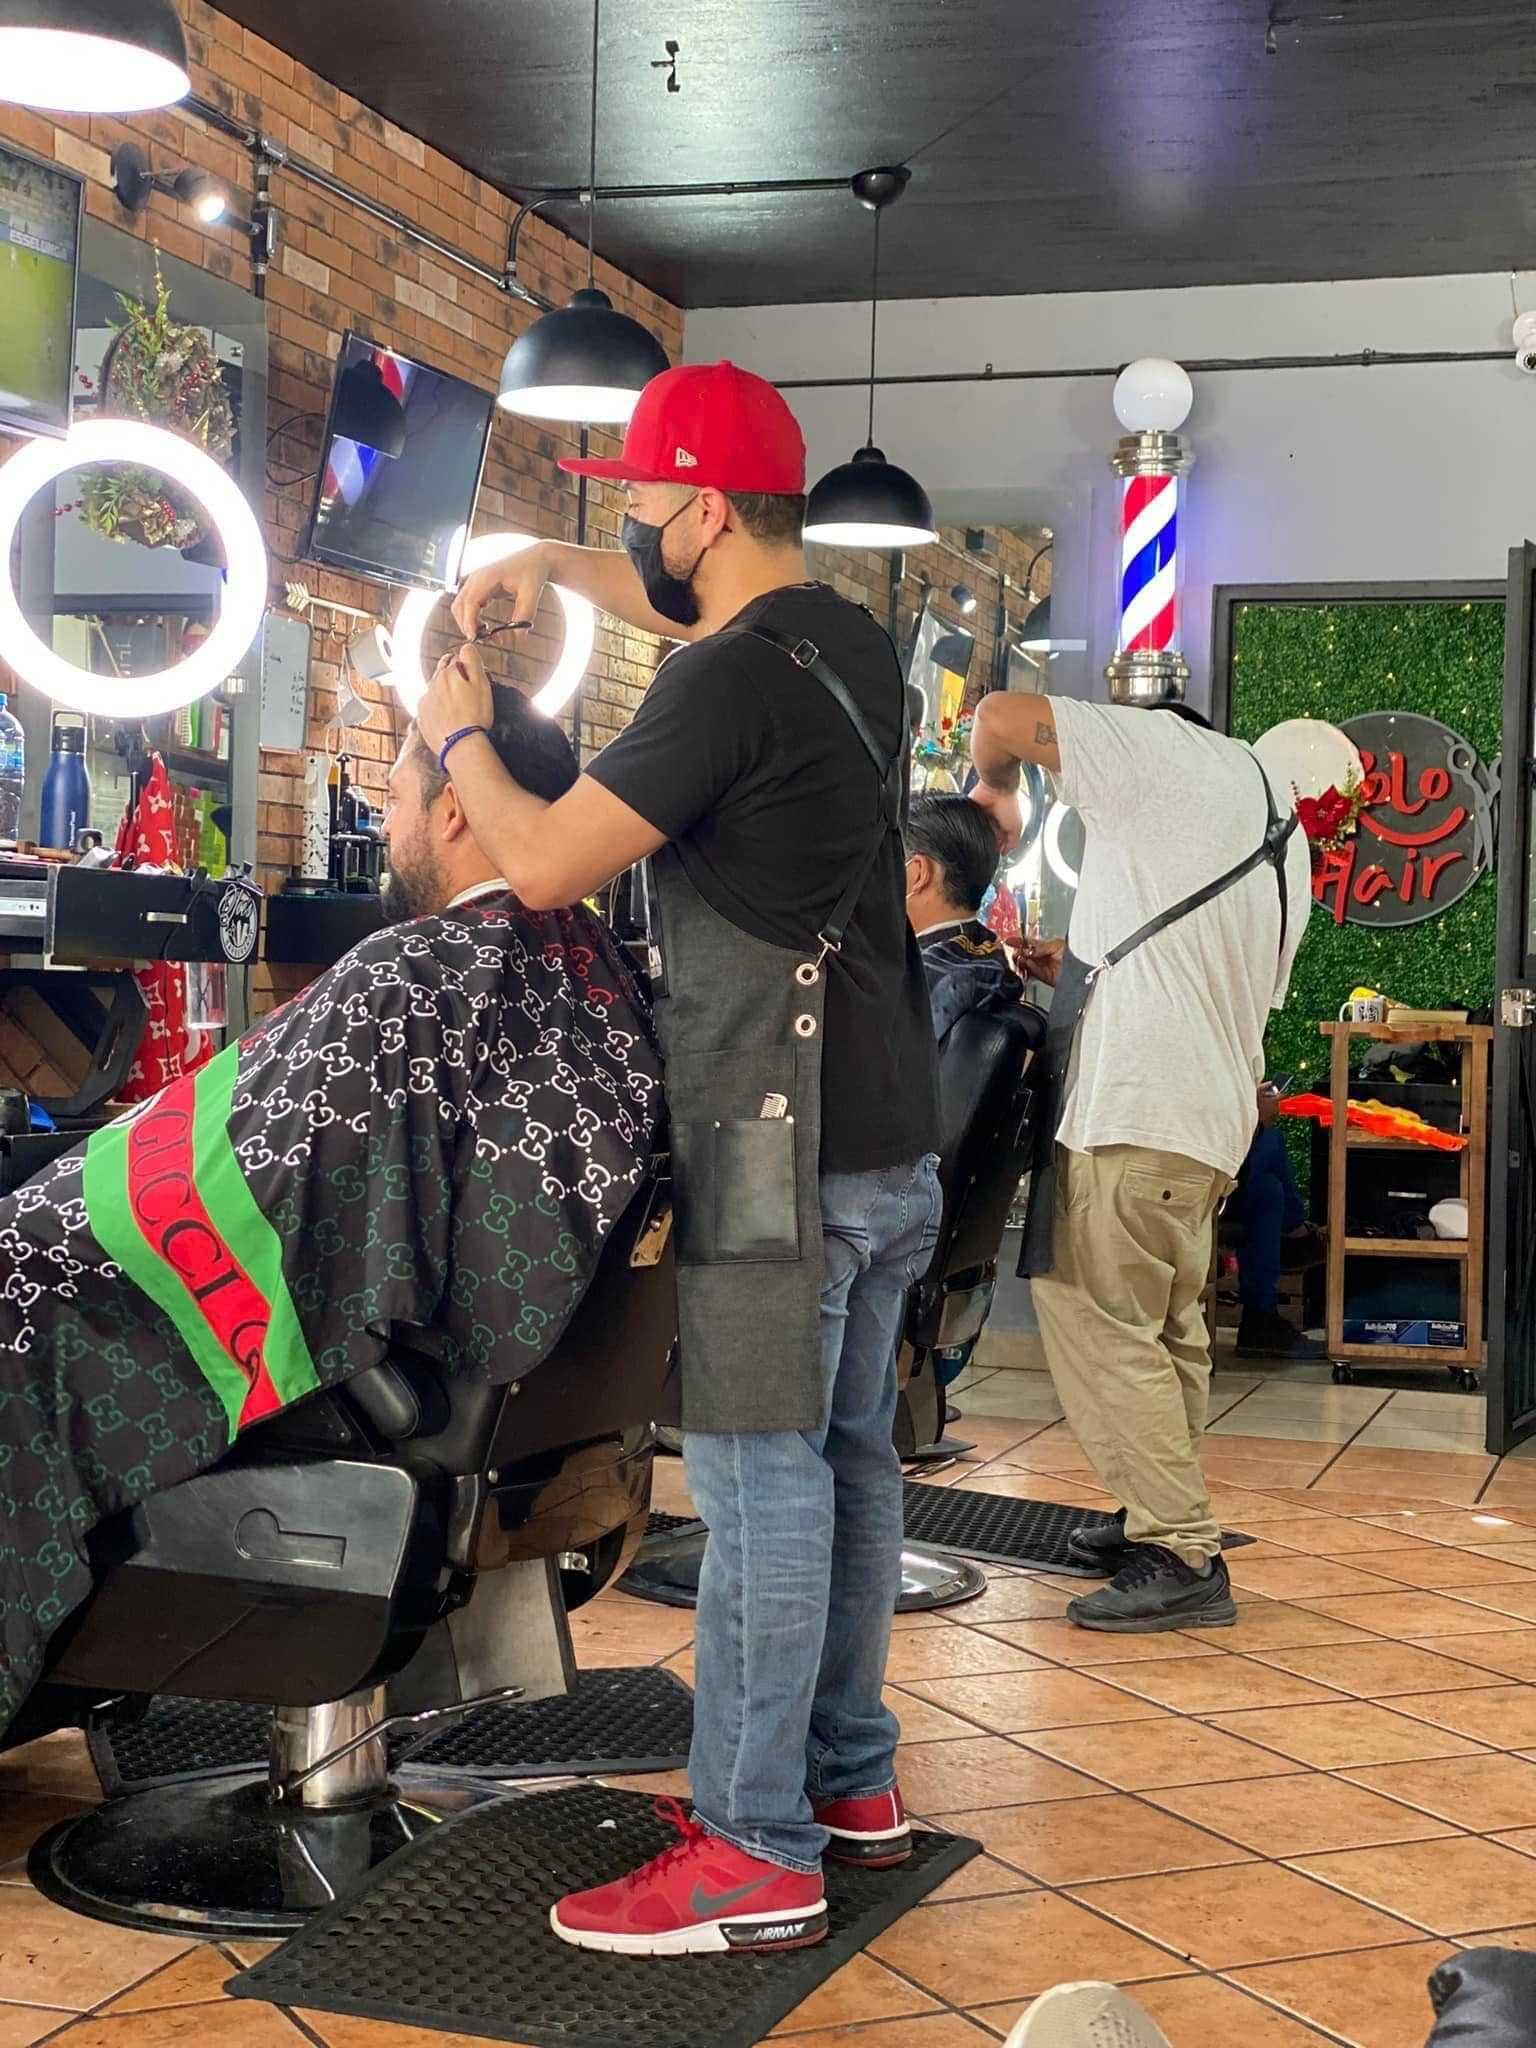 Joe’s Barbershop